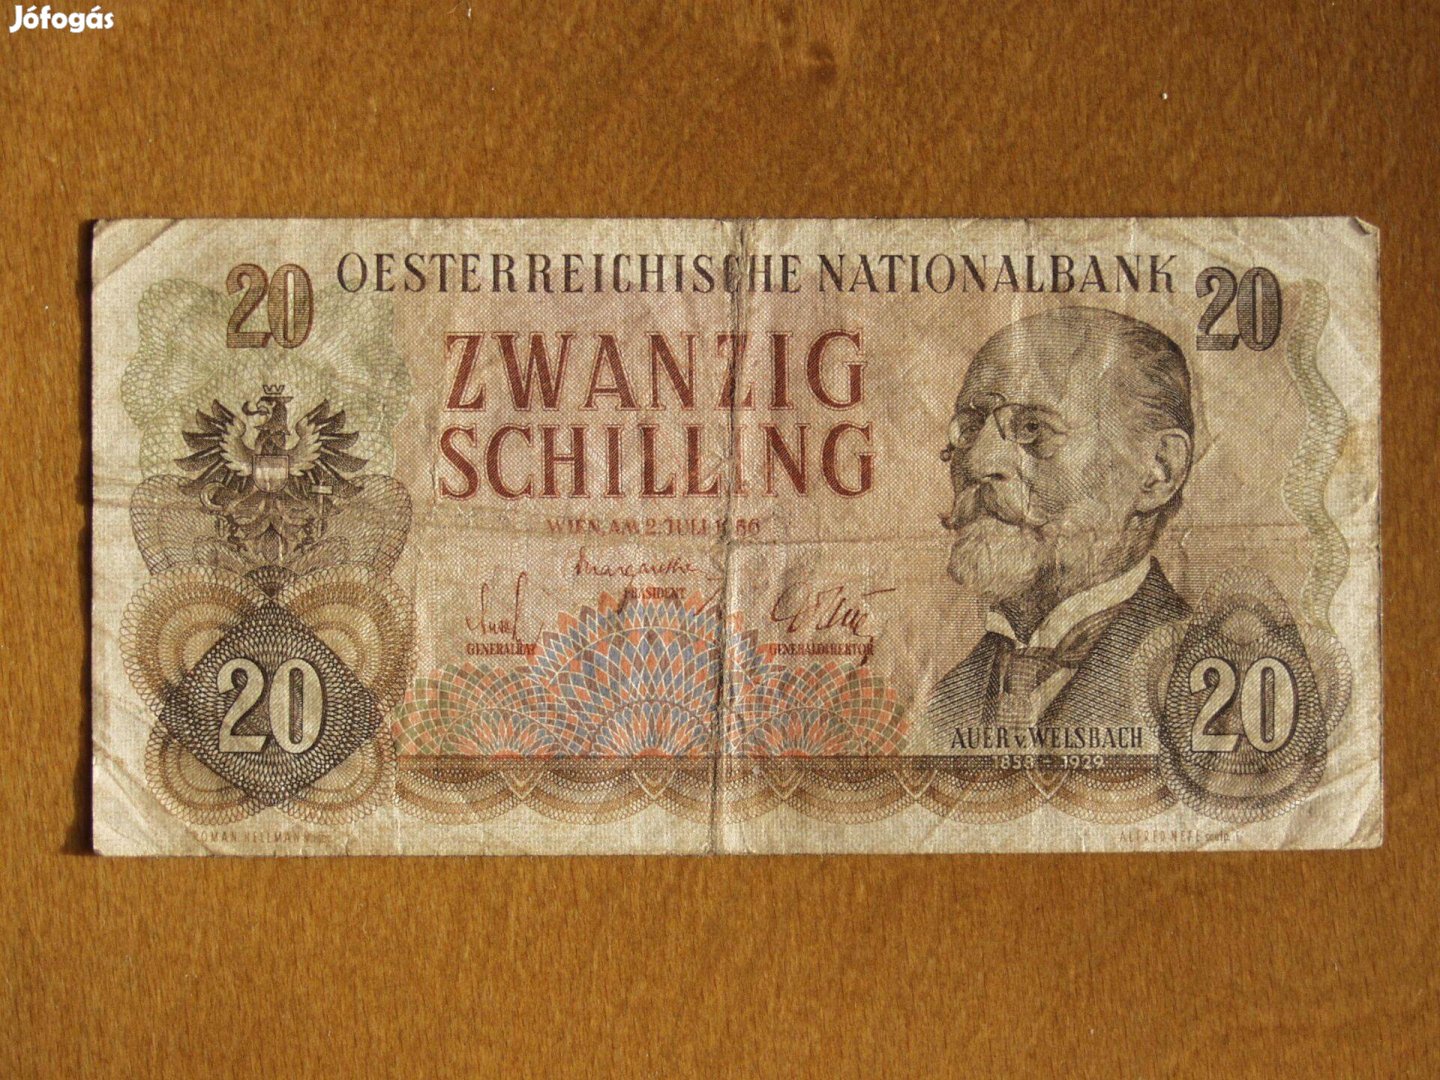 Papír Zwanzig schilling 20 schilling 1956-ből, ritka!